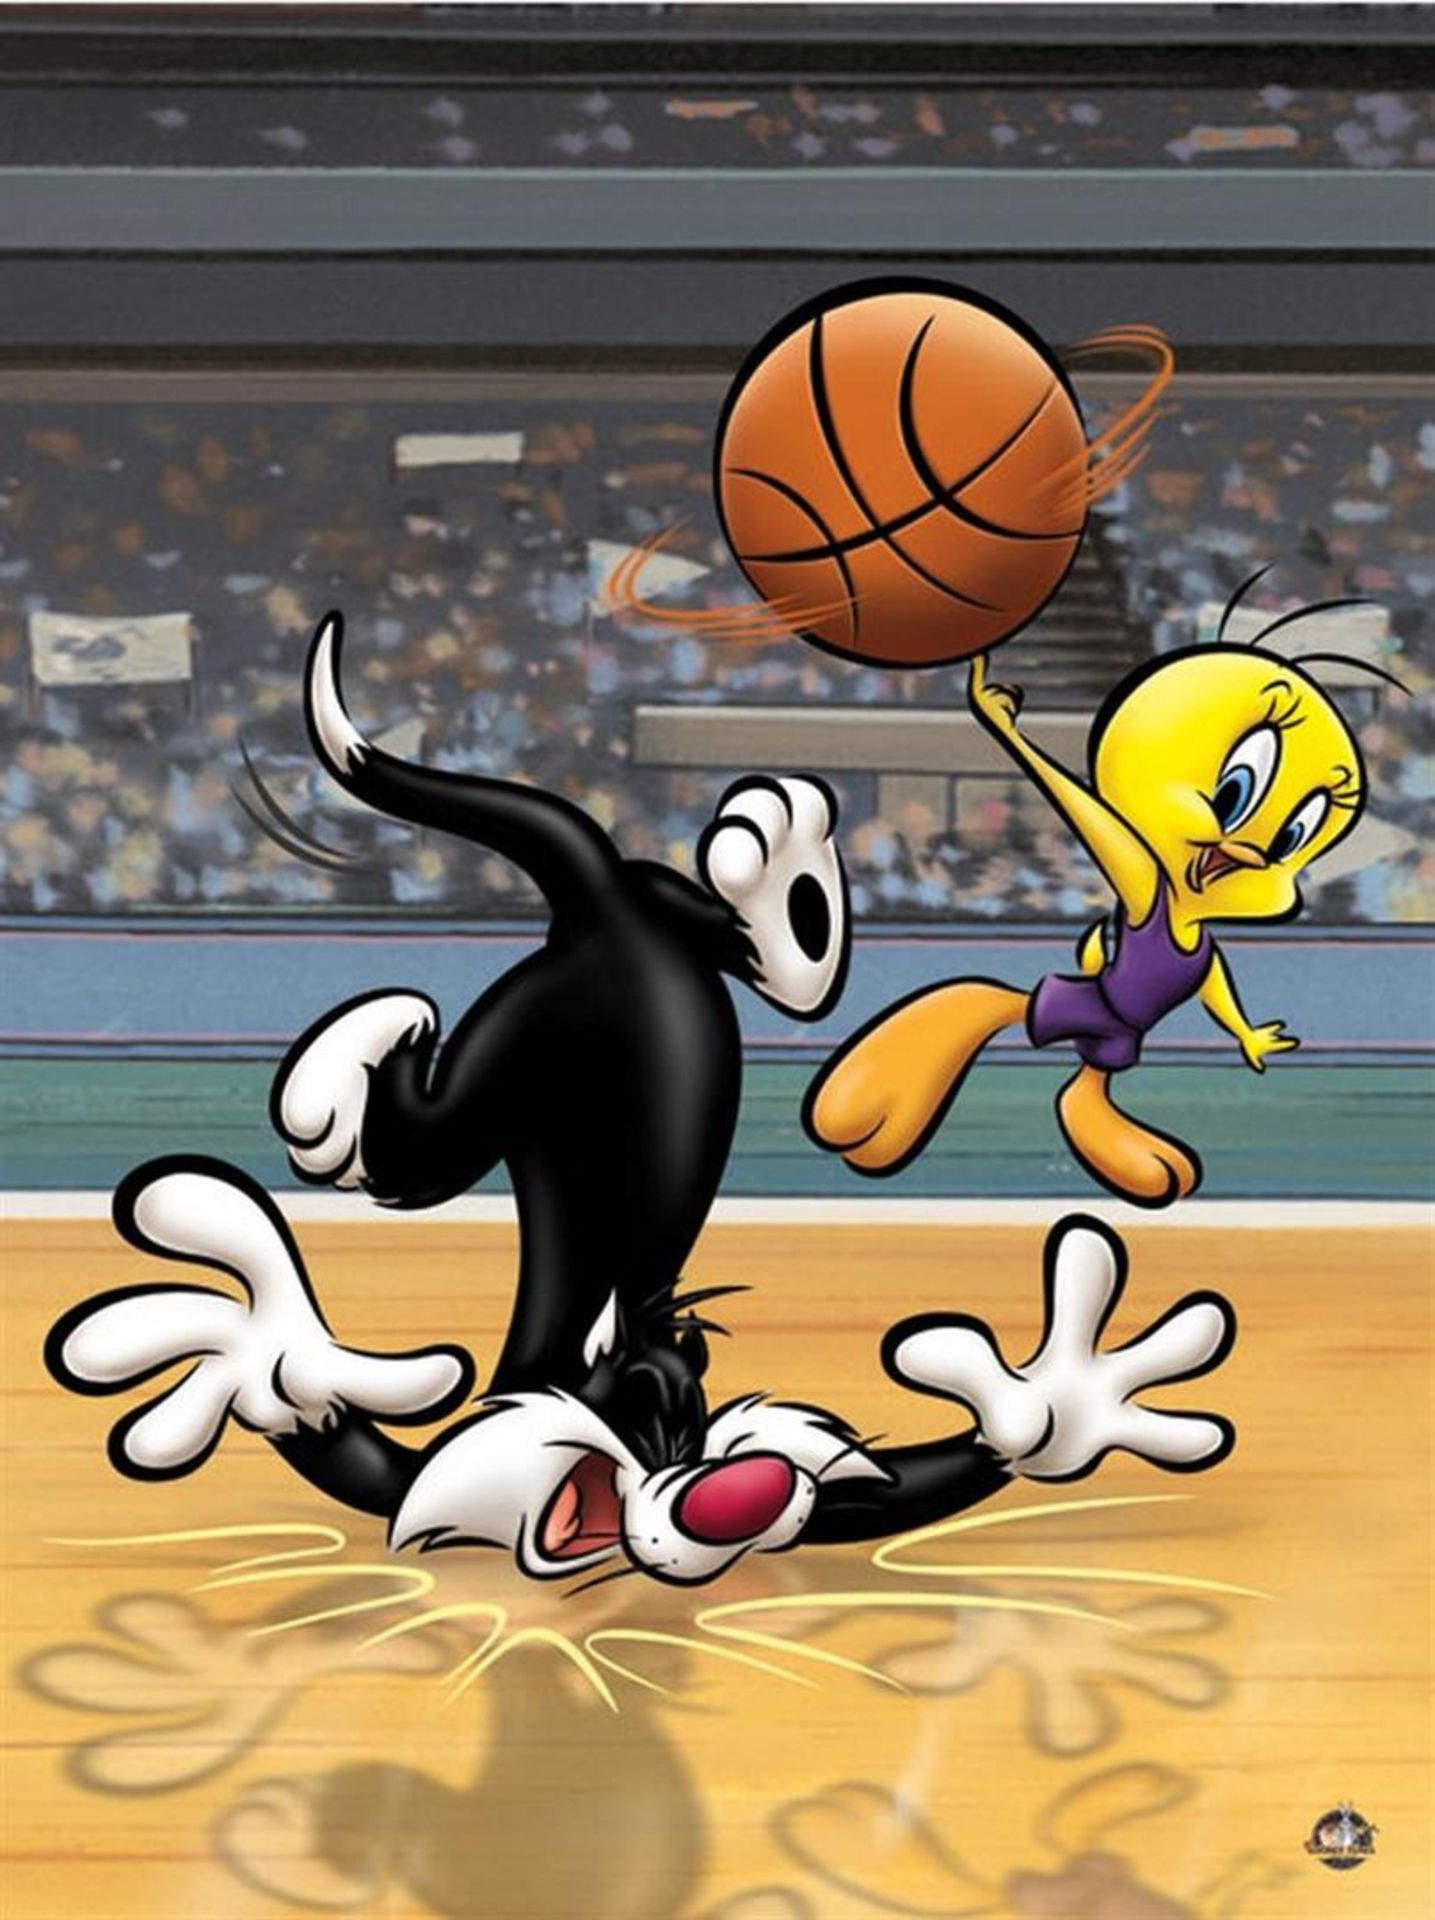 Warner Brothers Hologram Sylvester and Tweety Basketball - Image 2 of 2